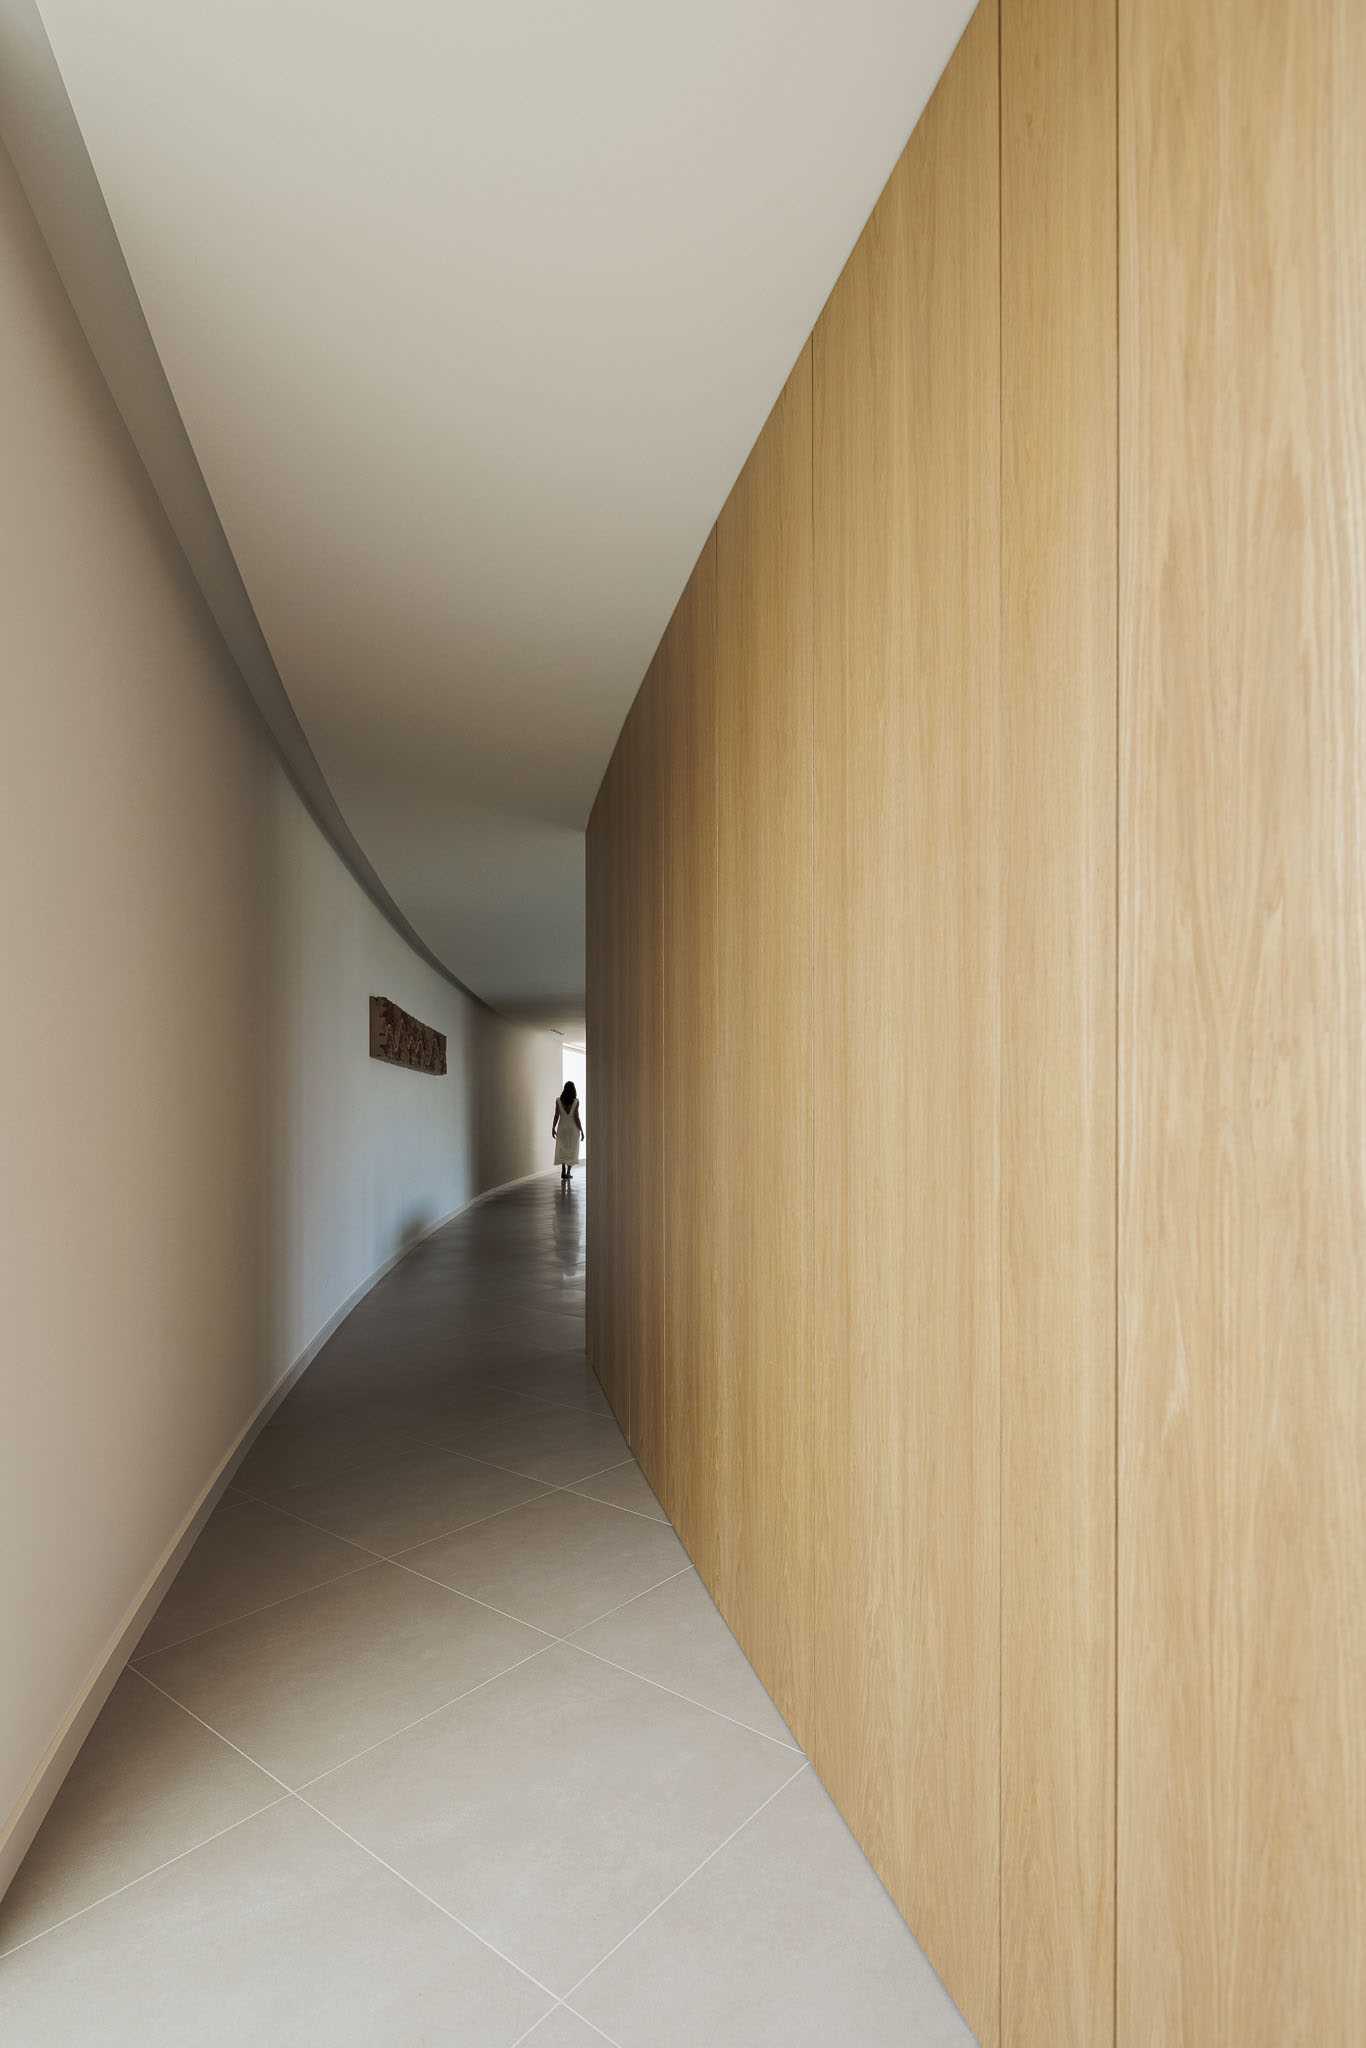 A curved hallway follows the shape of the house.